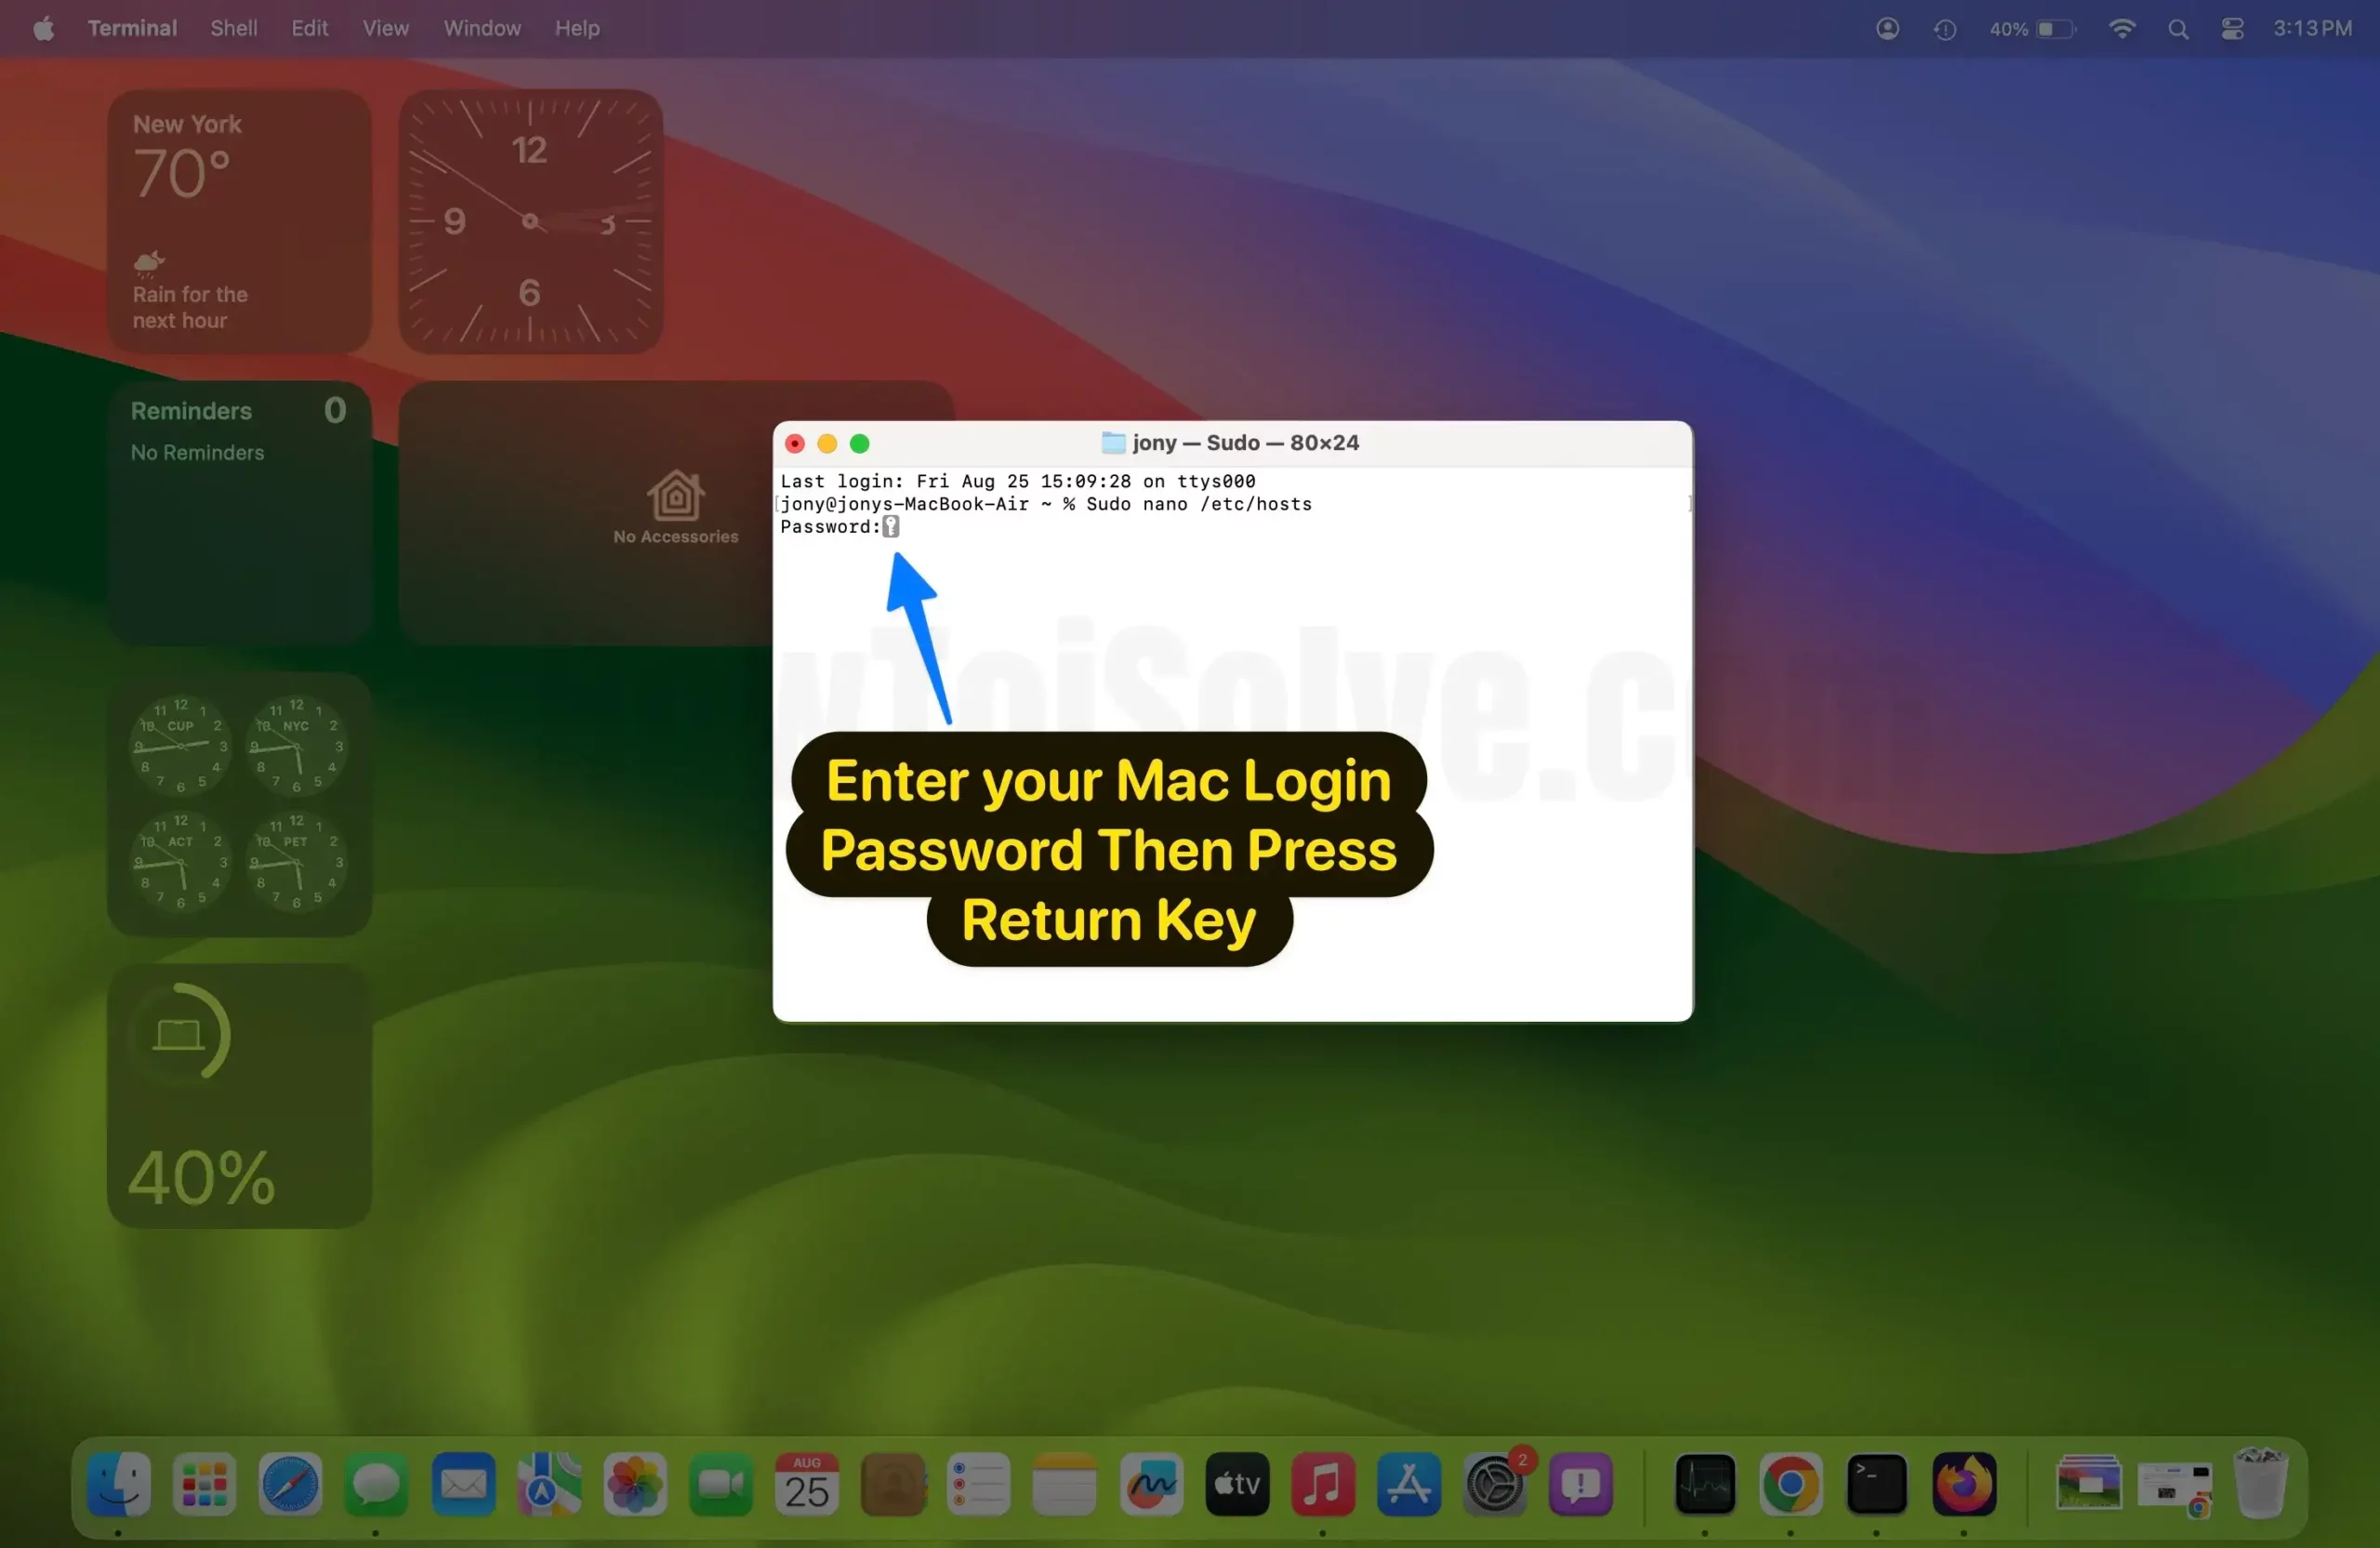 Enter your mac login password then press return key on mac